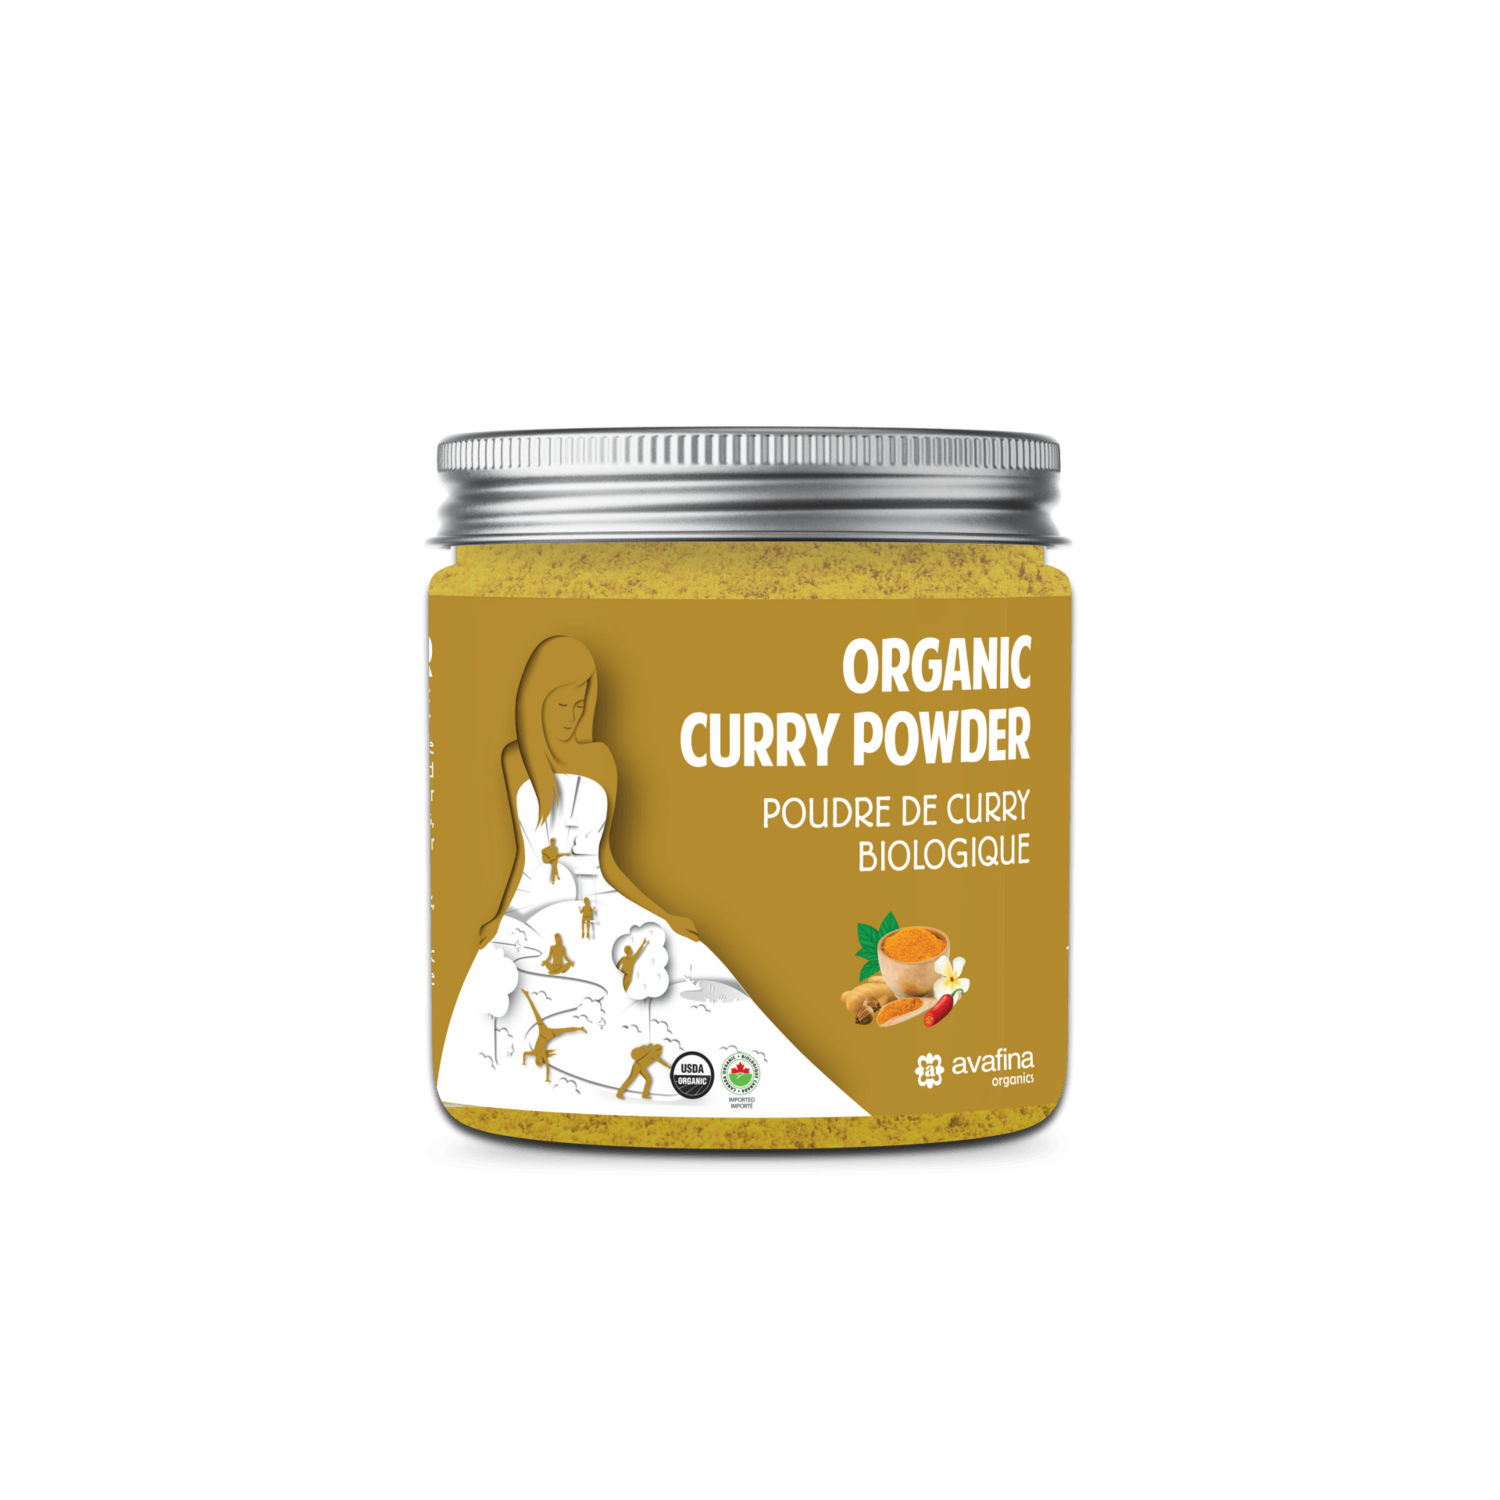 Organic Curry Powder (PET 1 JAR)